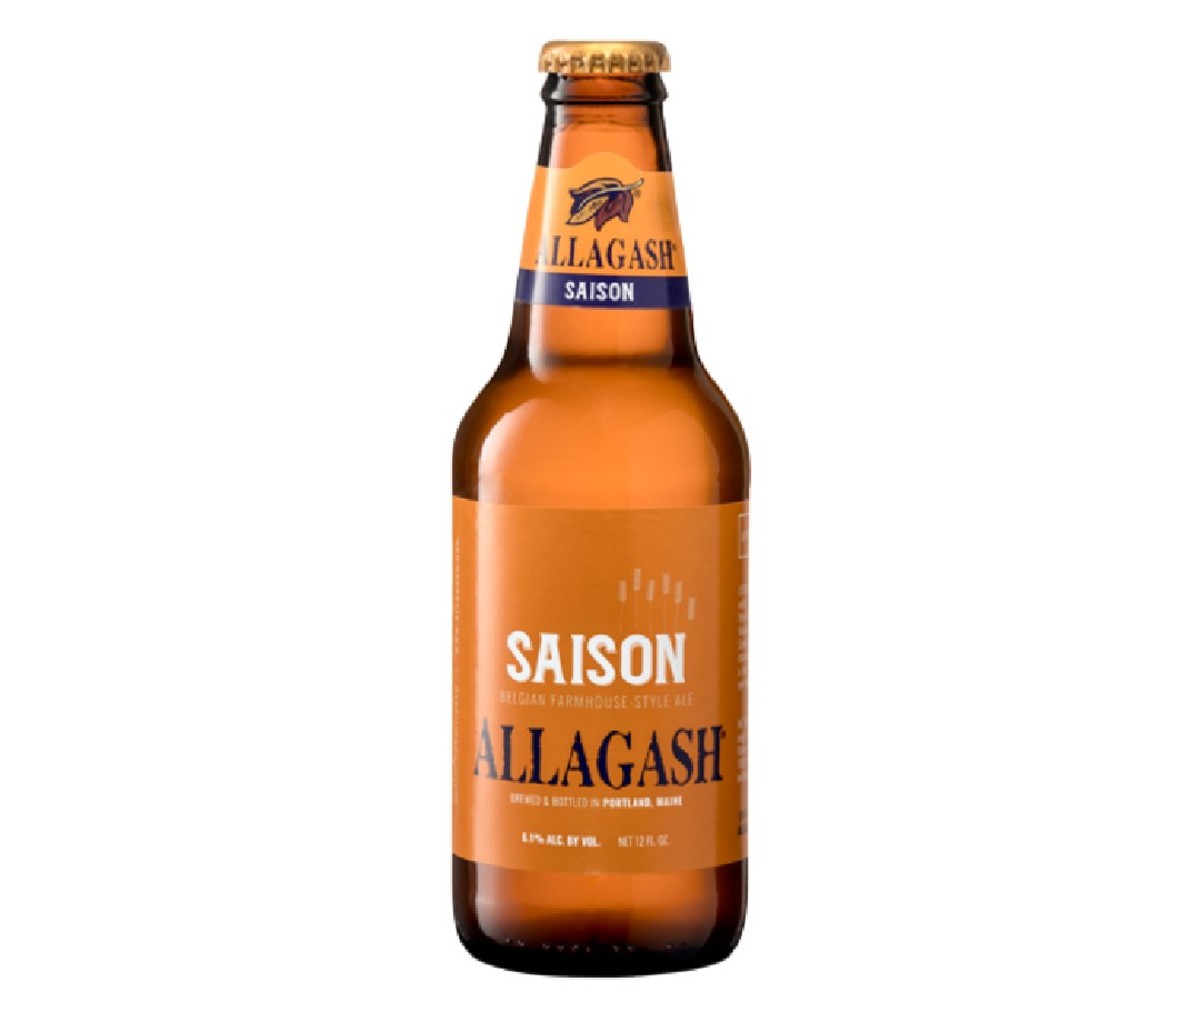 Bottle of Allagash Saison beer